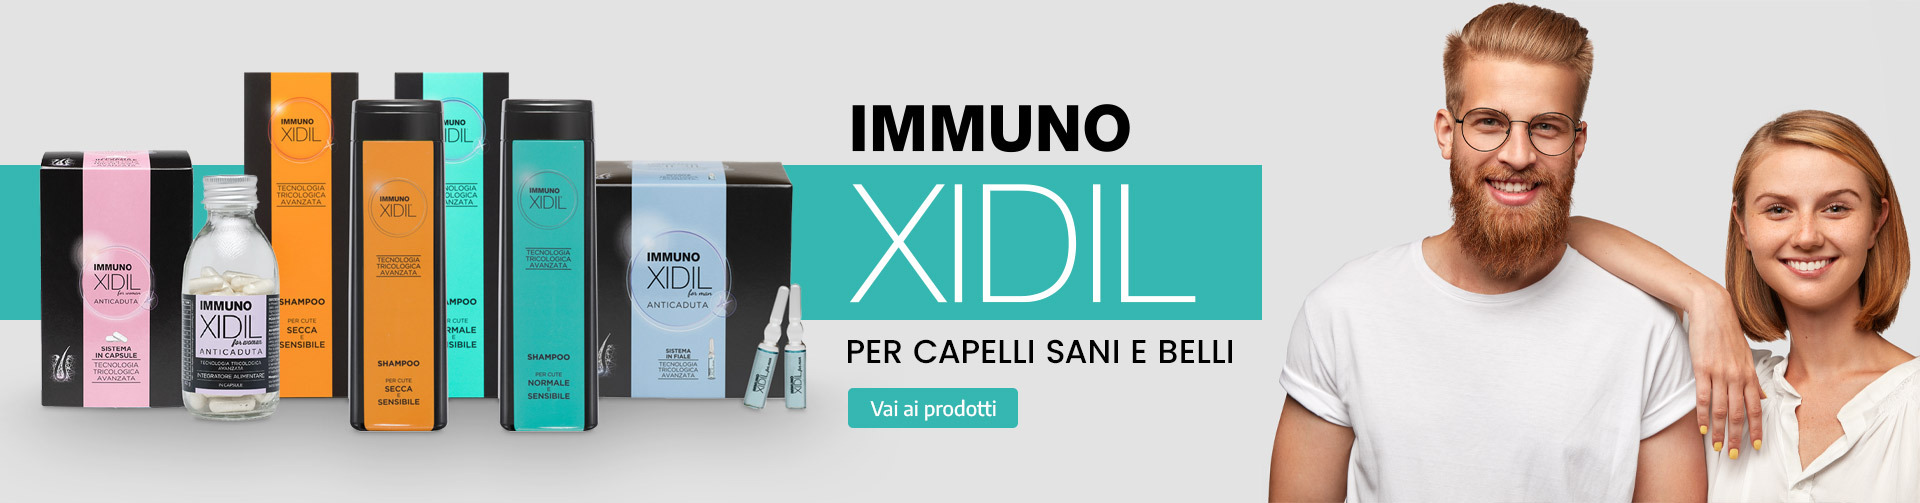 Immunoxidil